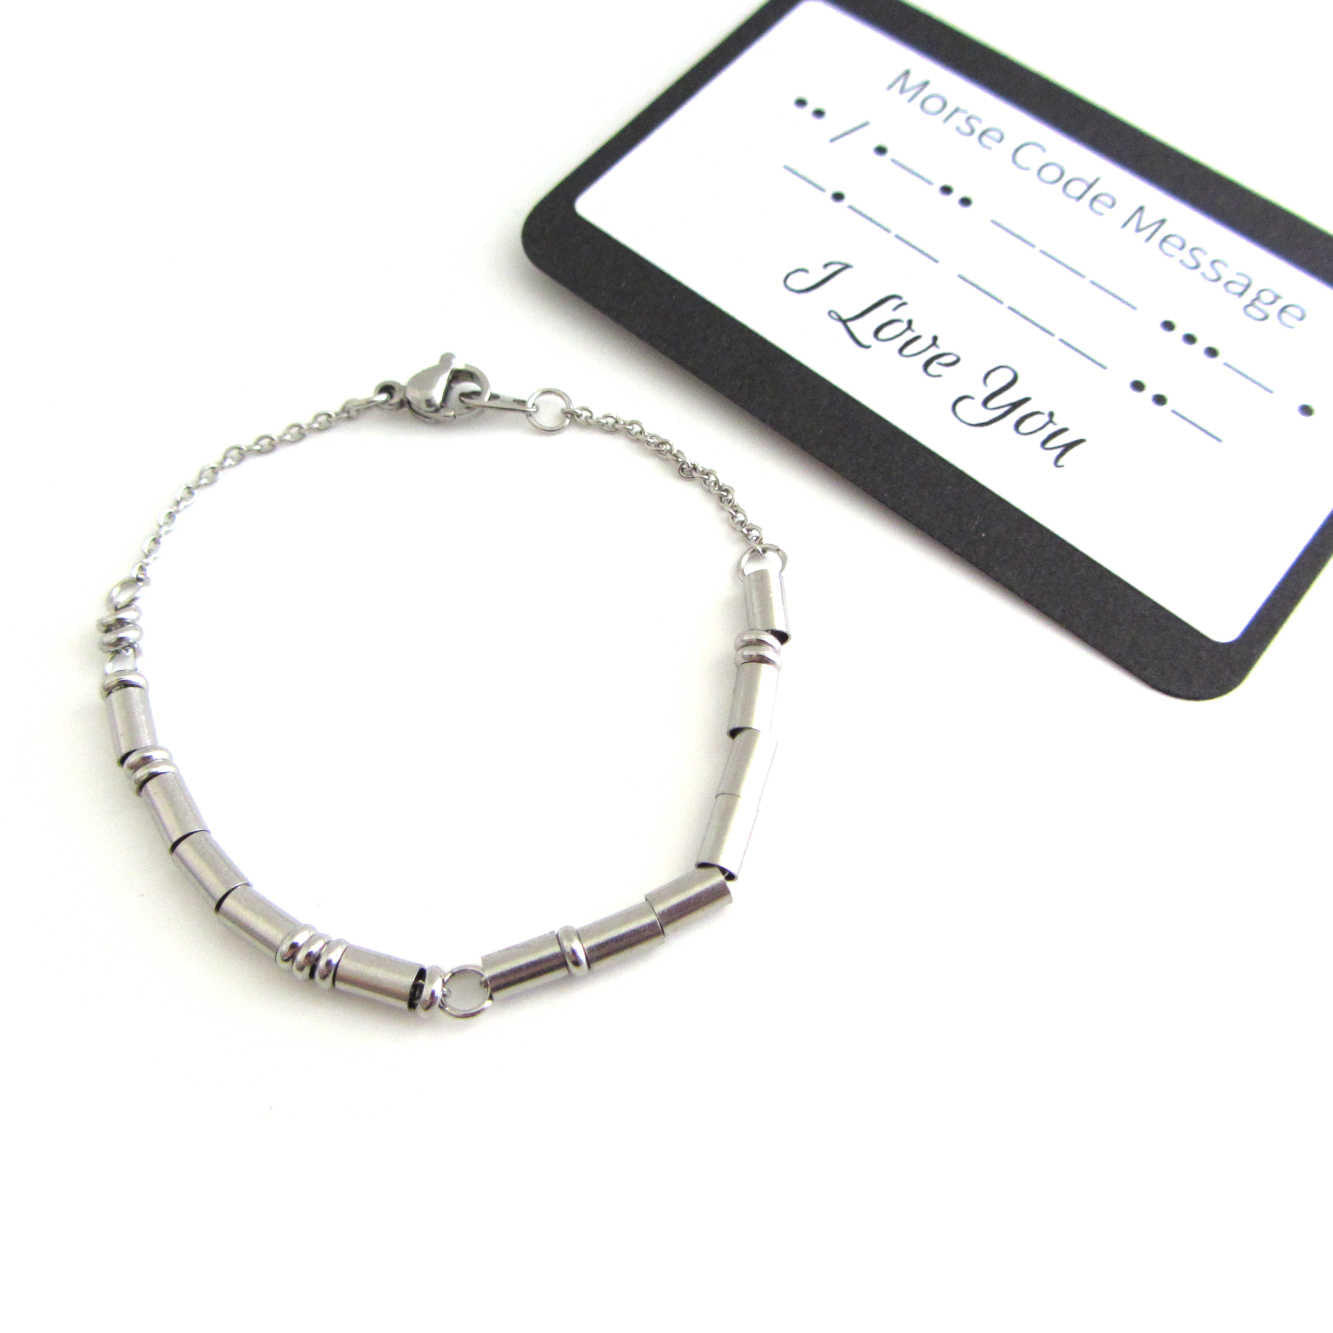 Silver Morse Code Bracelet